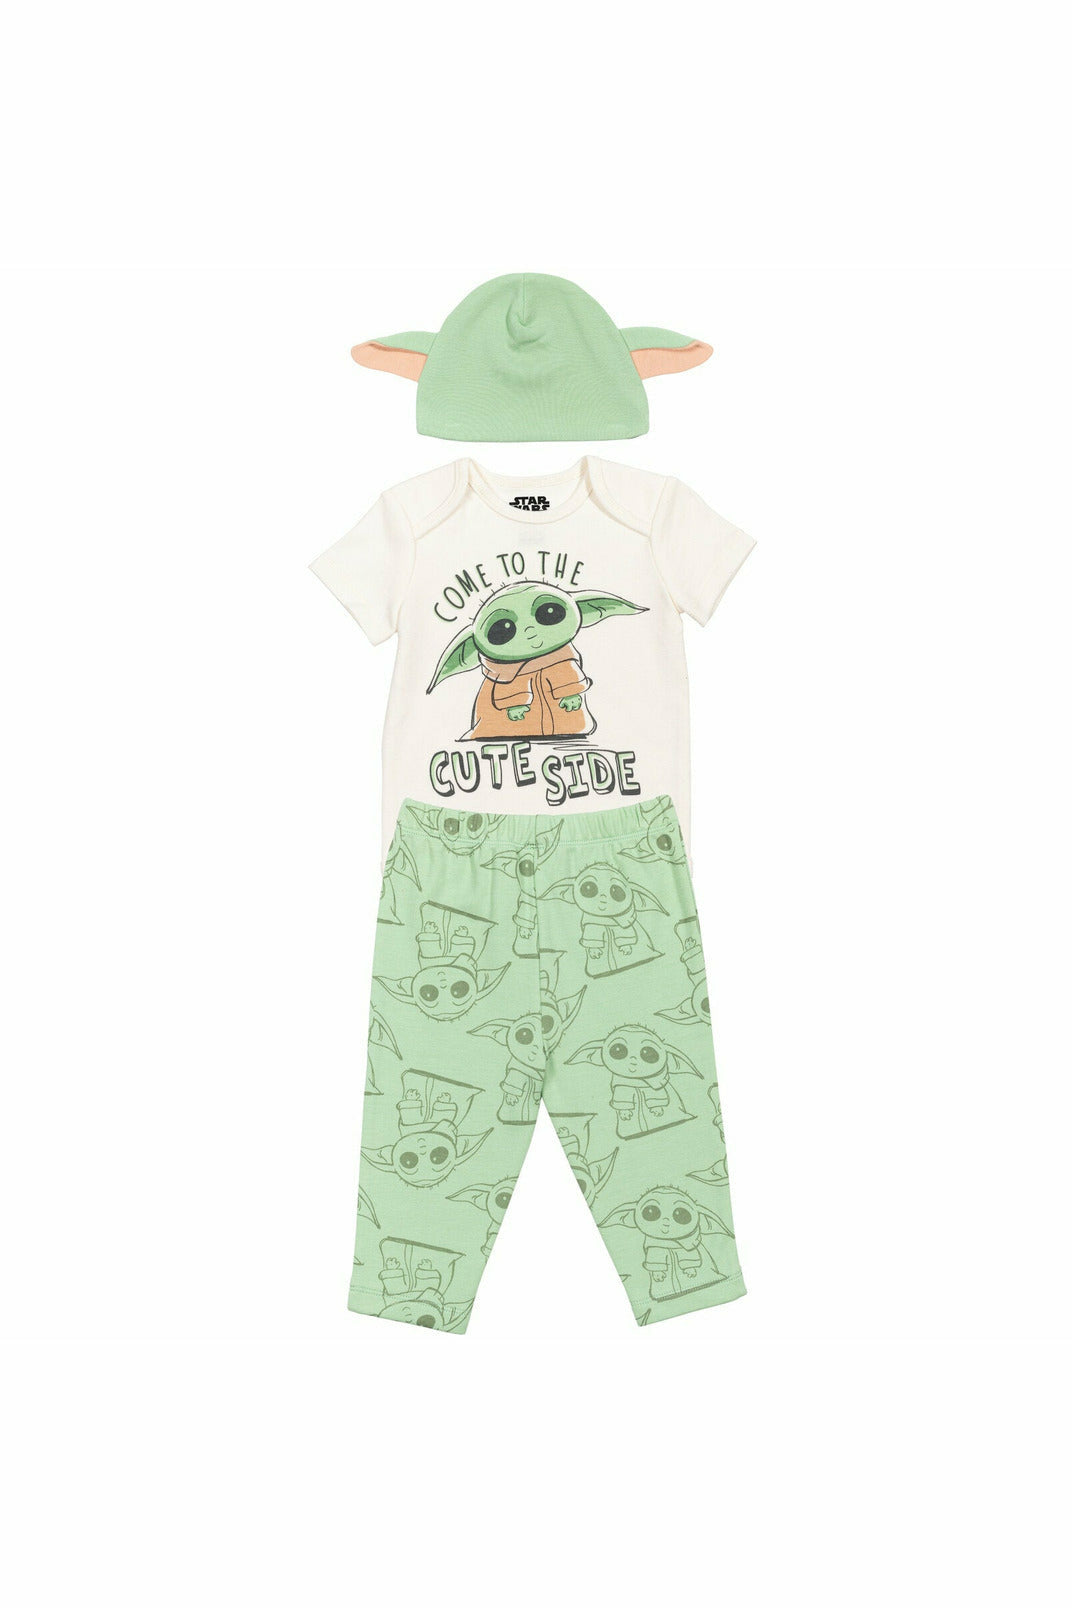 Star Wars The Mandalorian Baby Yoda 3 Piece Outfit Set: Bodysuit Pants Hat